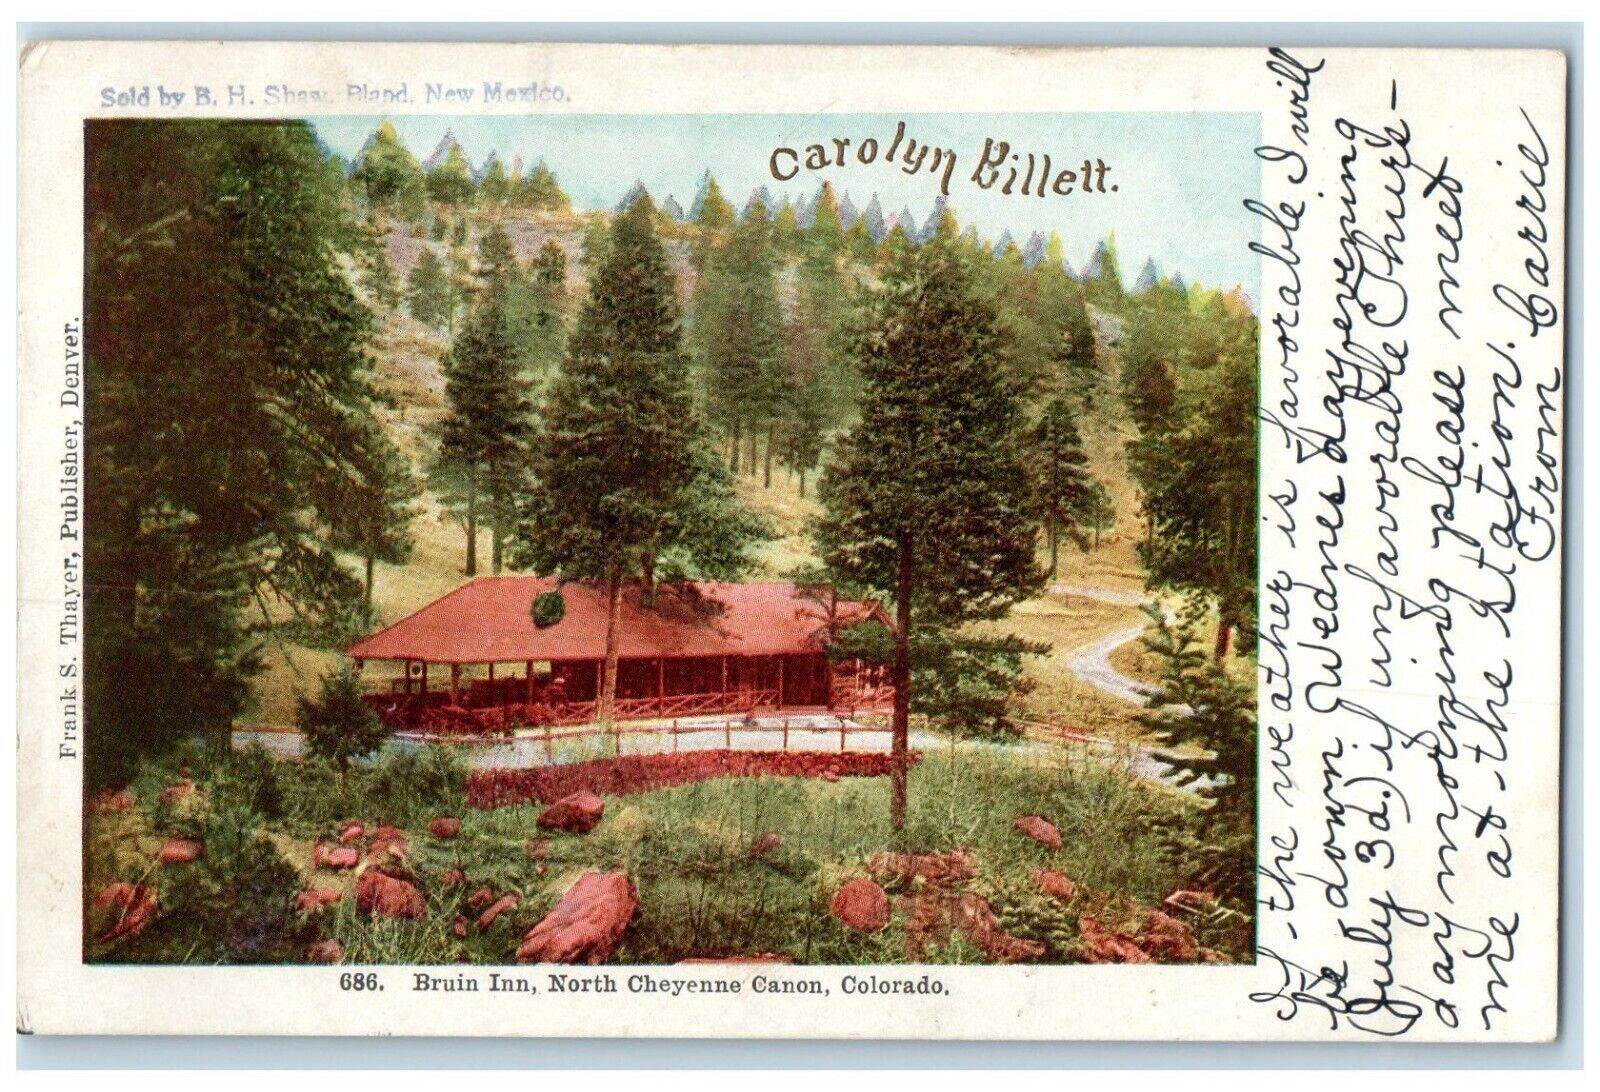 1907 Carolyn Billett Bruin Inn North Exterior Cheyenne Canon Colorado Postcard